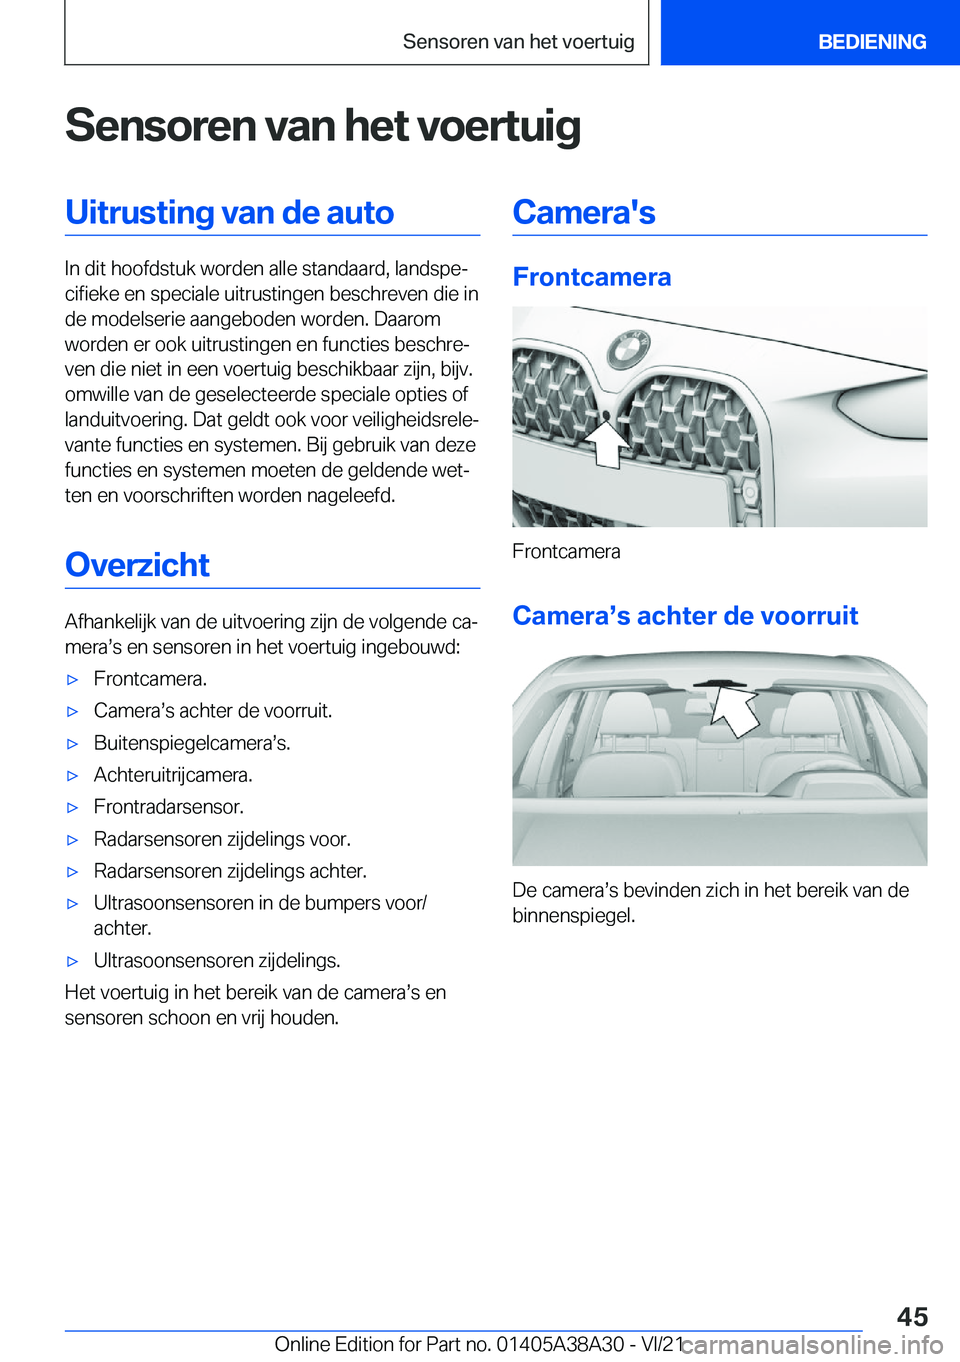 BMW 4 SERIES GRAN COUPE 2022  Instructieboekjes (in Dutch) �S�e�n�s�o�r�e�n��v�a�n��h�e�t��v�o�e�r�t�u�i�g�U�i�t�r�u�s�t�i�n�g��v�a�n��d�e��a�u�t�o
�I�n��d�i�t��h�o�o�f�d�s�t�u�k��w�o�r�d�e�n��a�l�l�e��s�t�a�n�d�a�a�r�d�,��l�a�n�d�s�p�ej�c�i�f�i�